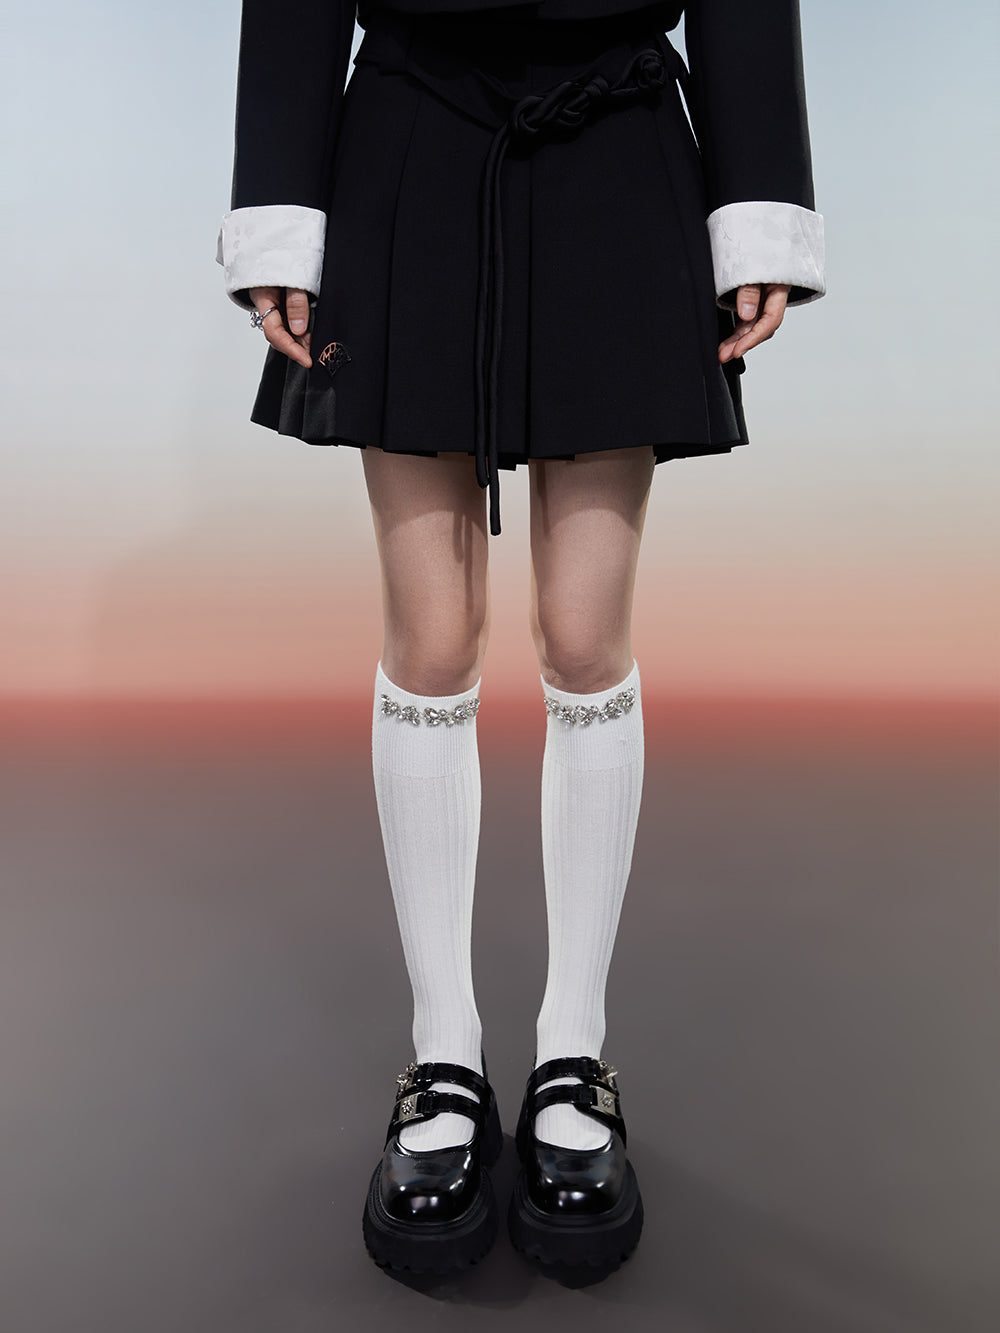 MUKZIN Classic Versatile Black Slimming Pleated Skirt